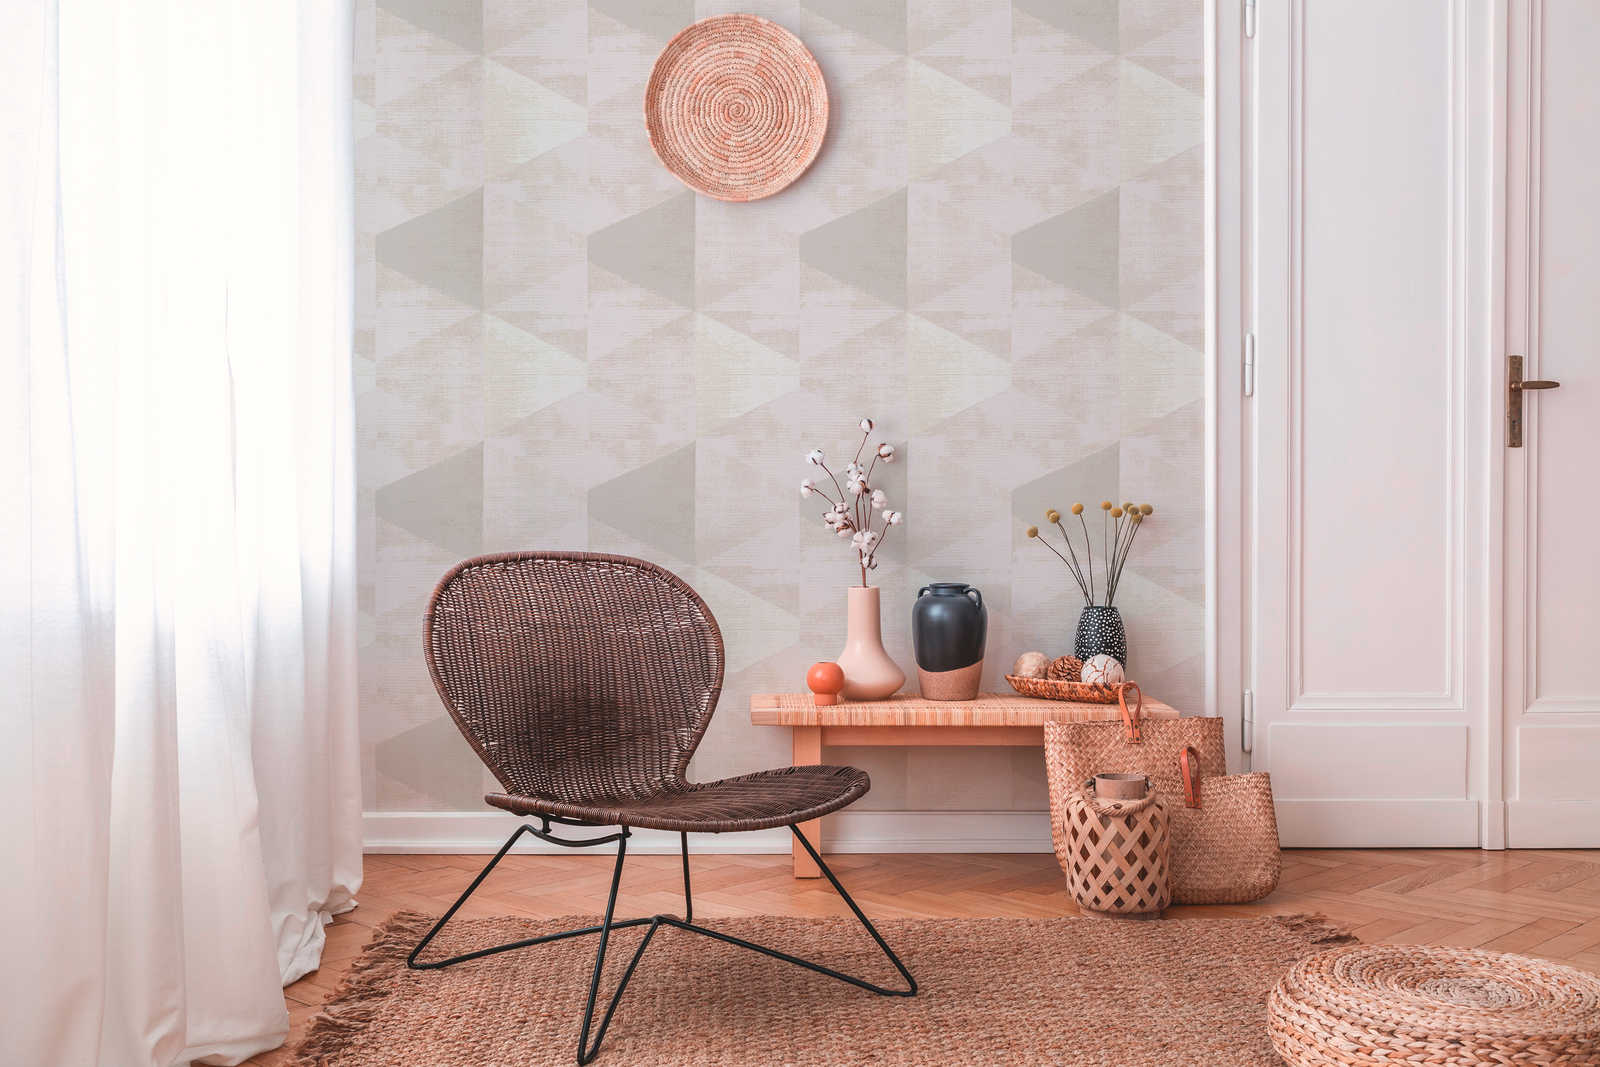             Non-woven wallpaper facets pattern with metallic accent - metallic, beige, cream
        